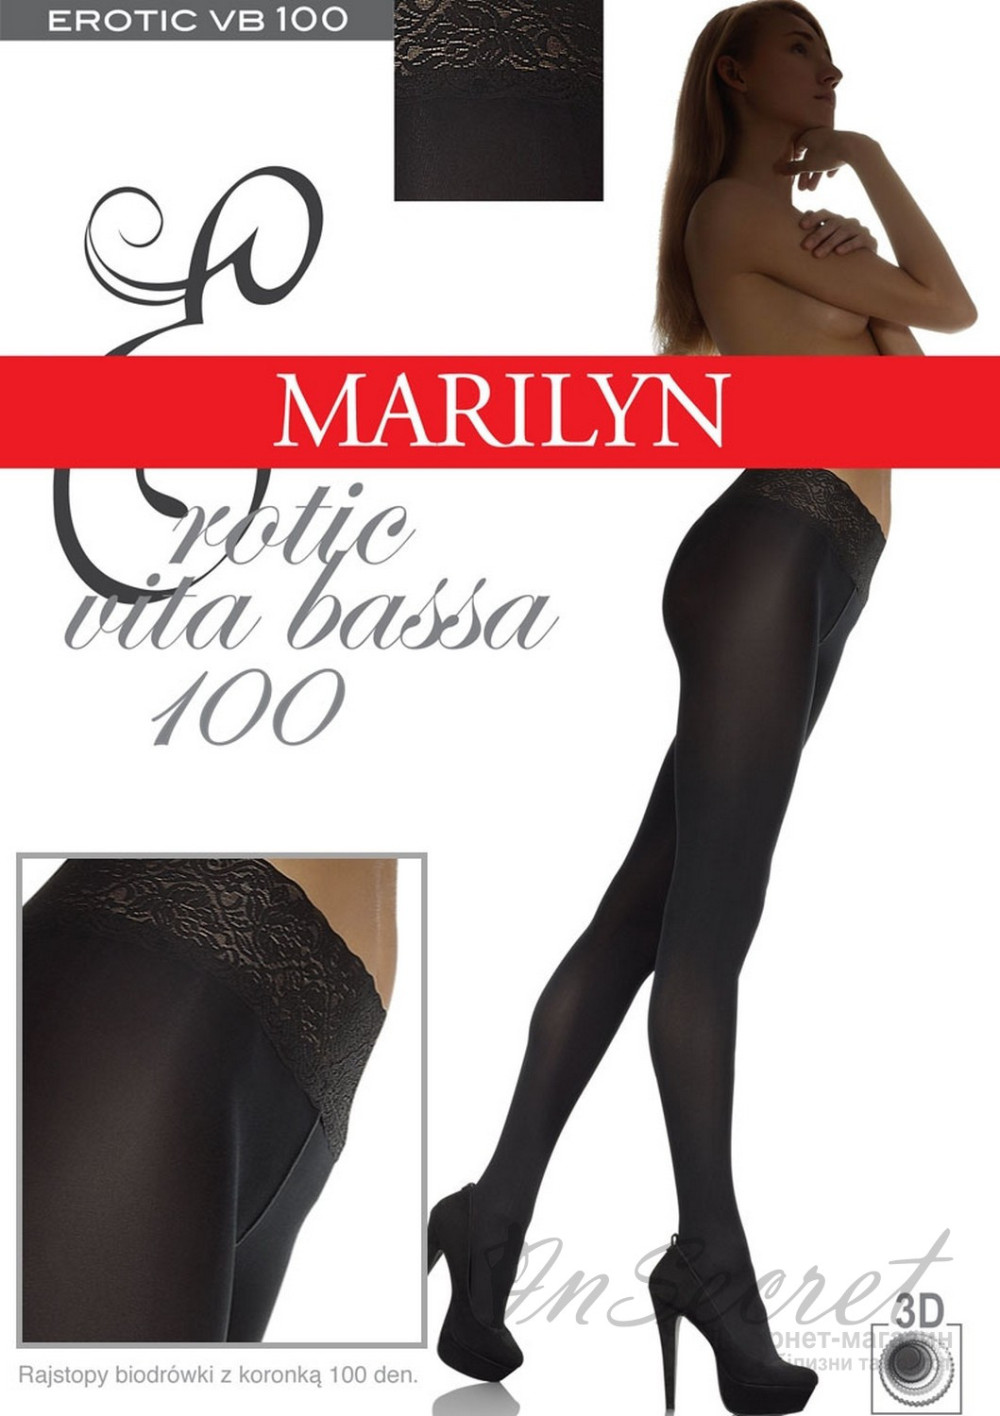 Колготки з мереживним поясом Marilyn Erotic 100 den VB